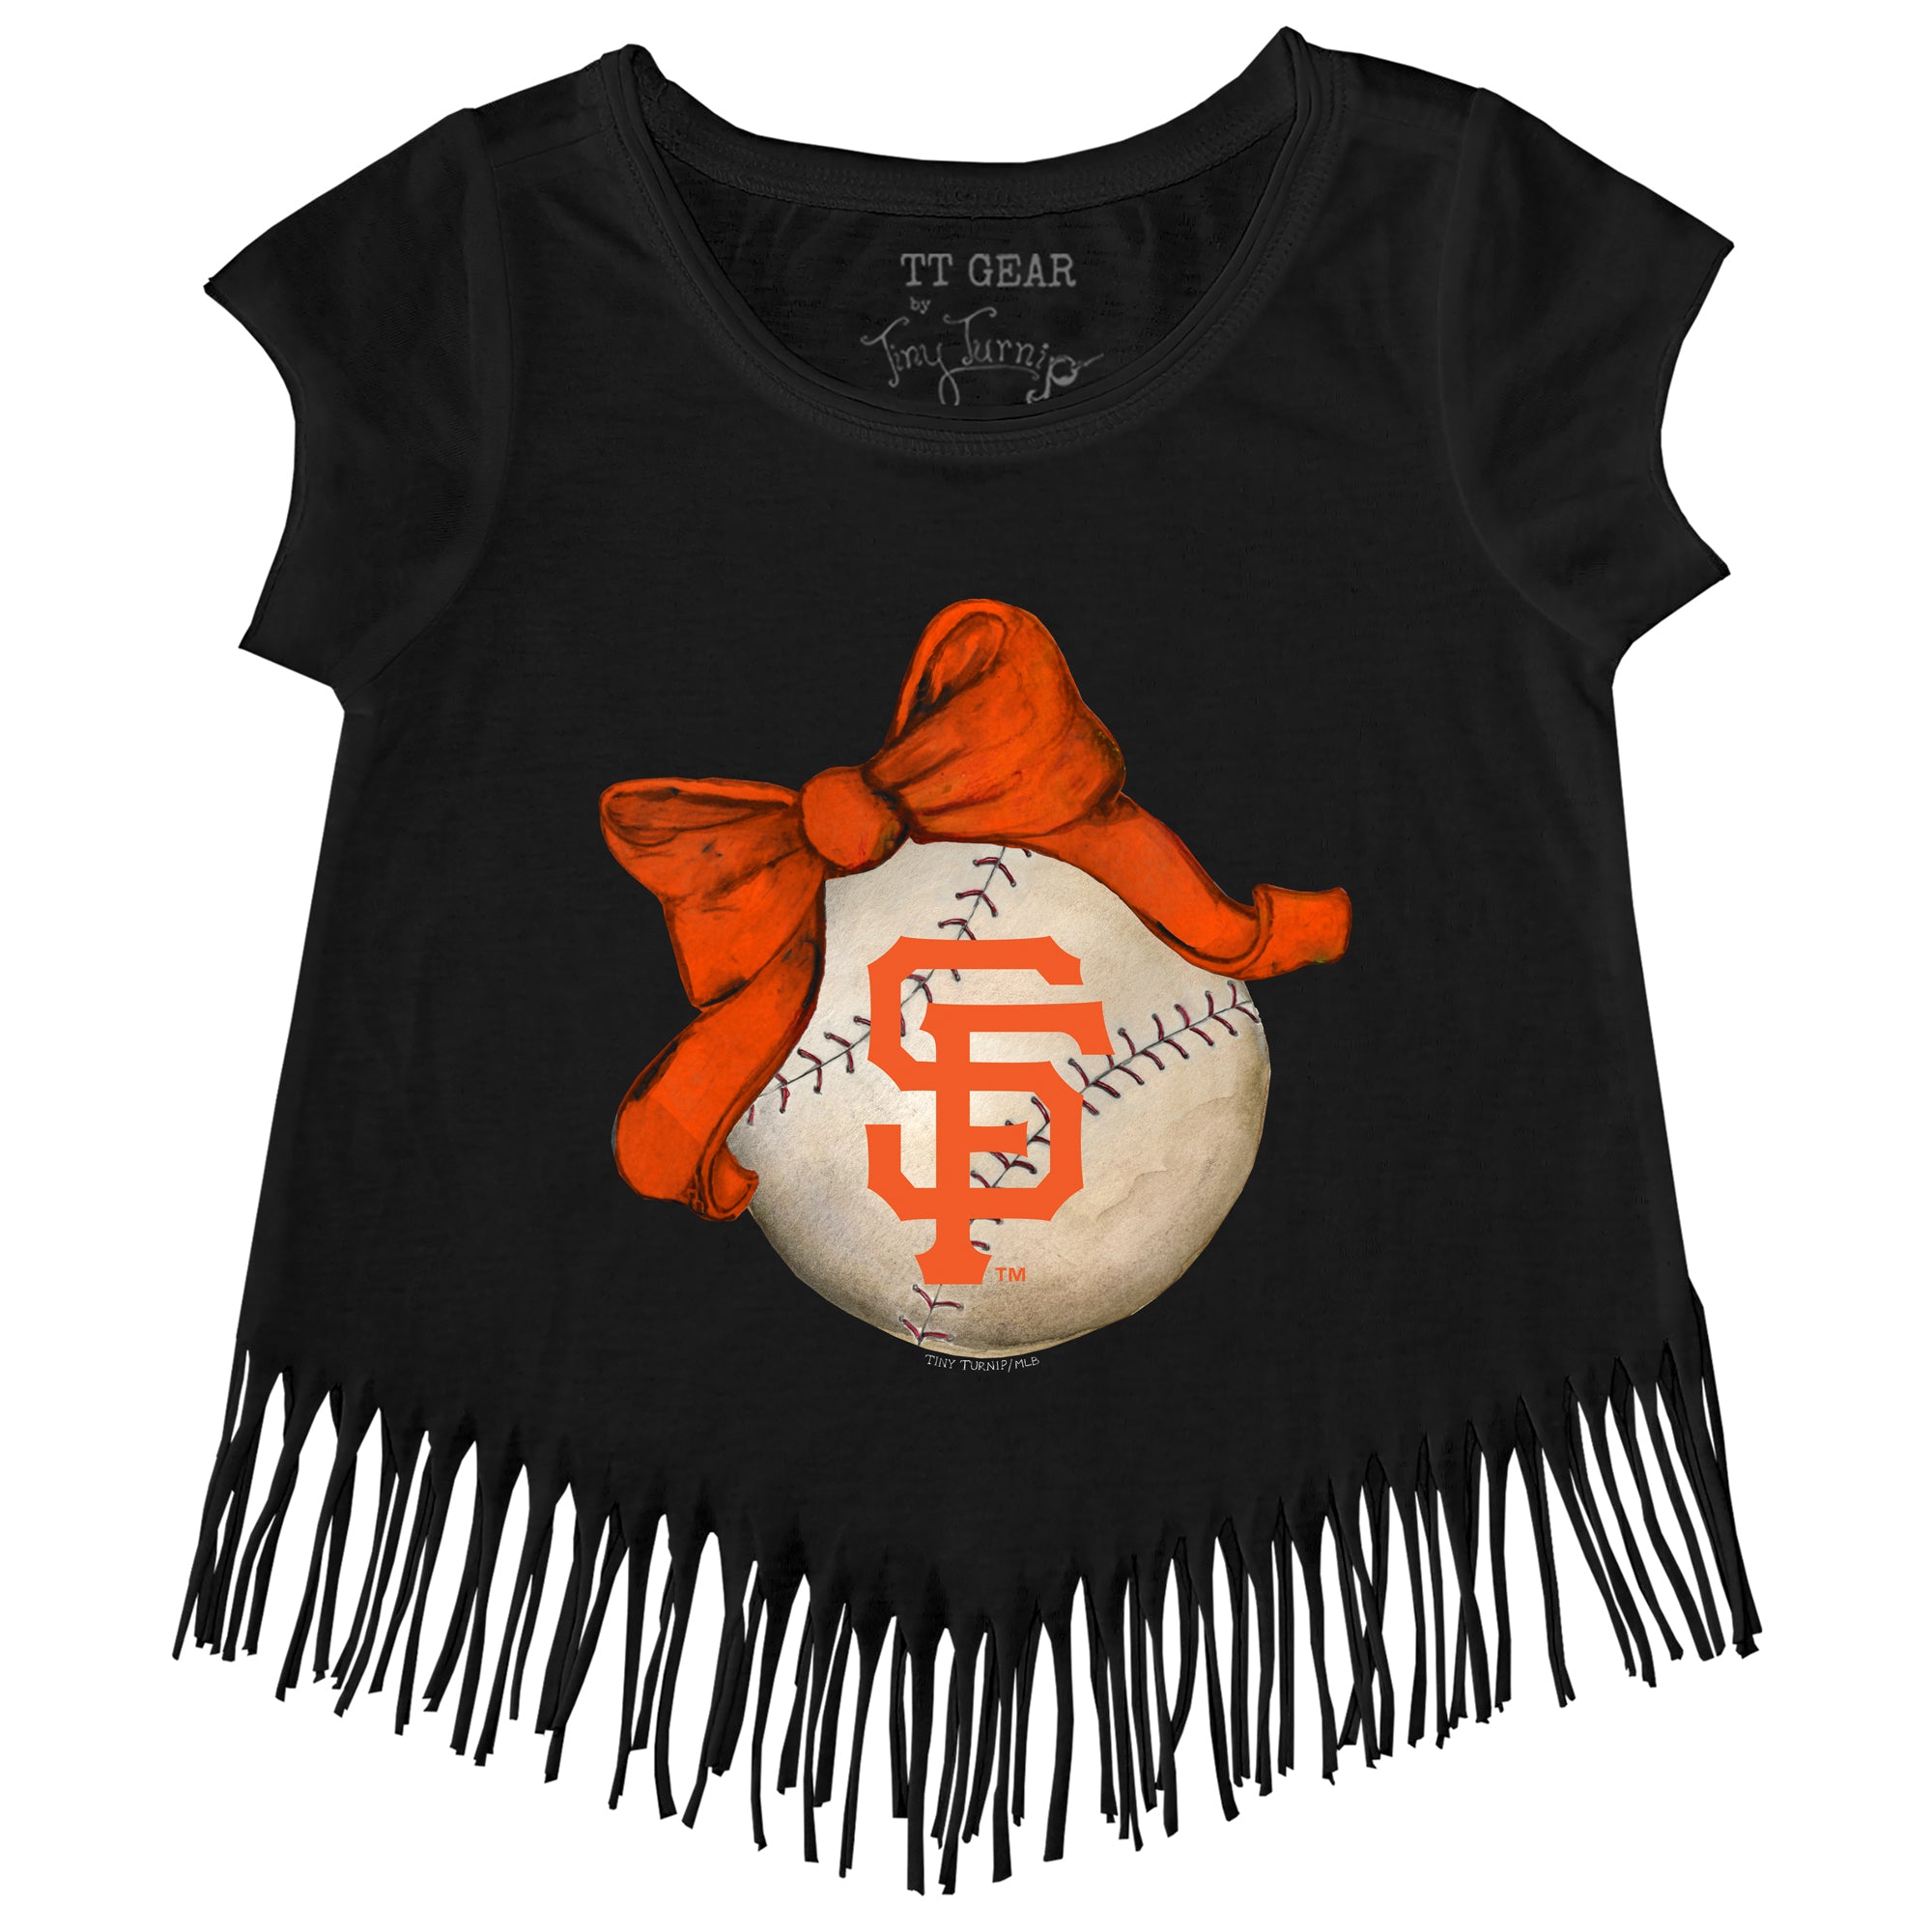 San Francisco Giants Tiny Turnip Youth Stitched Baseball 3/4-Sleeve Raglan  T-Shirt - White/Black